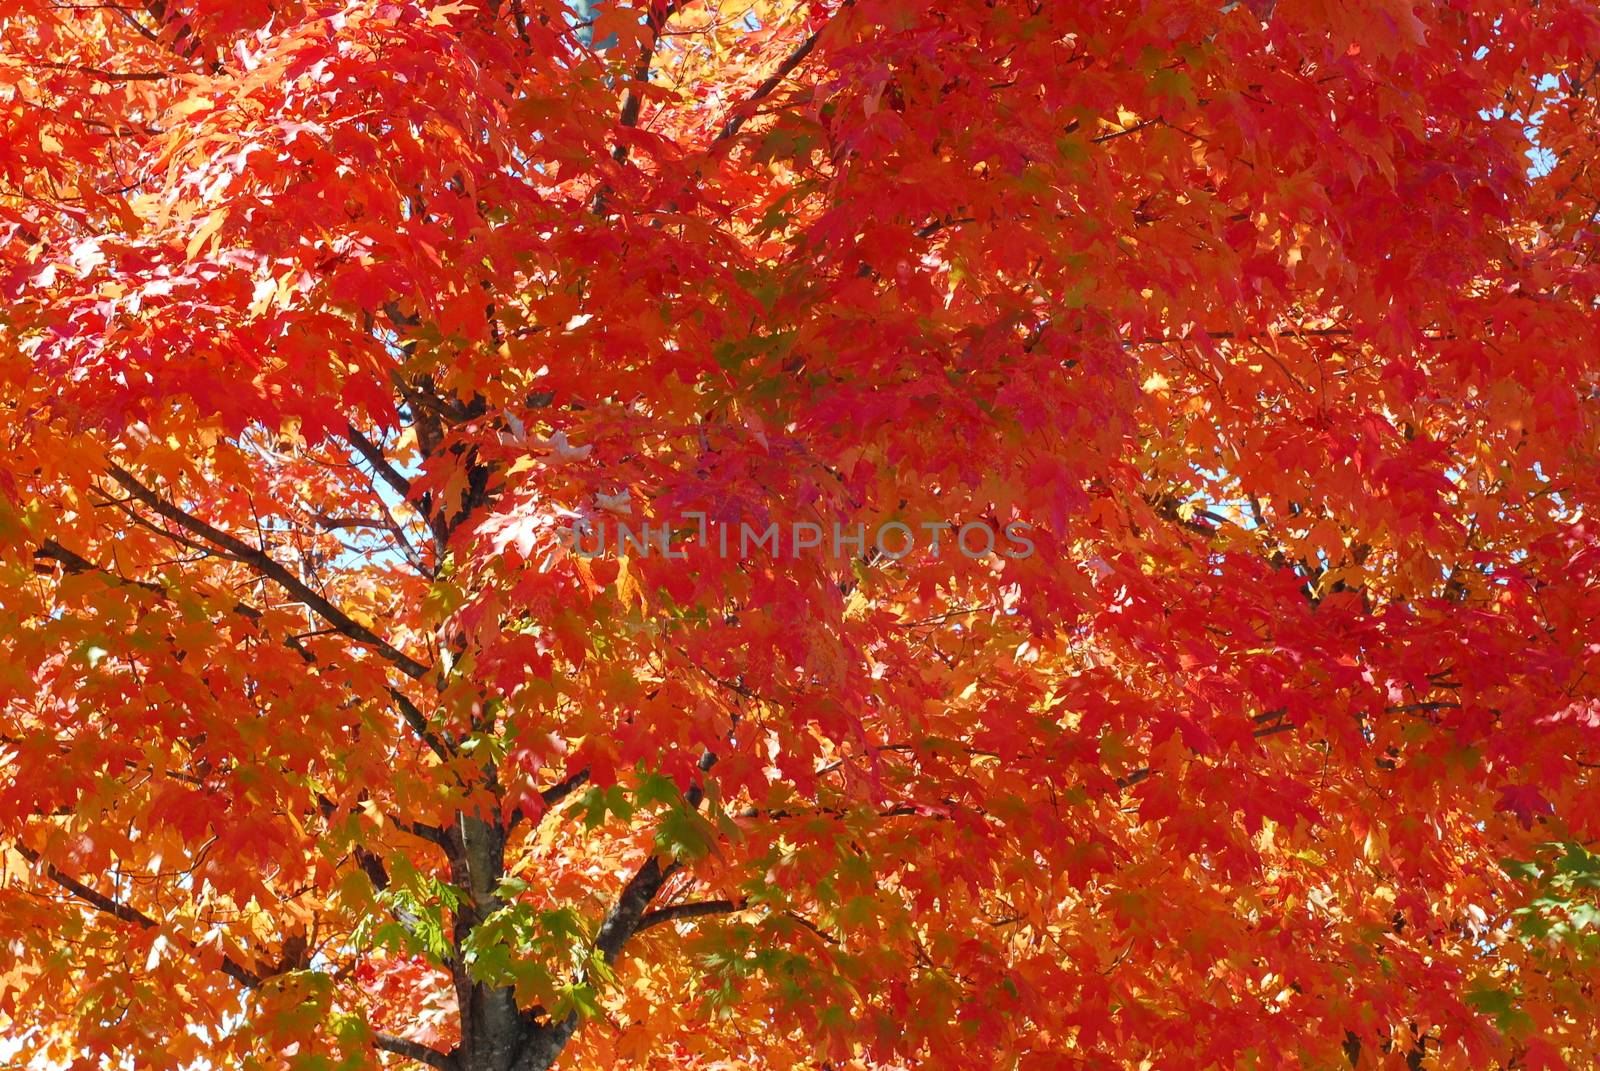 Orange Yellow Fall Foliage colors of Maple tree in Autumn